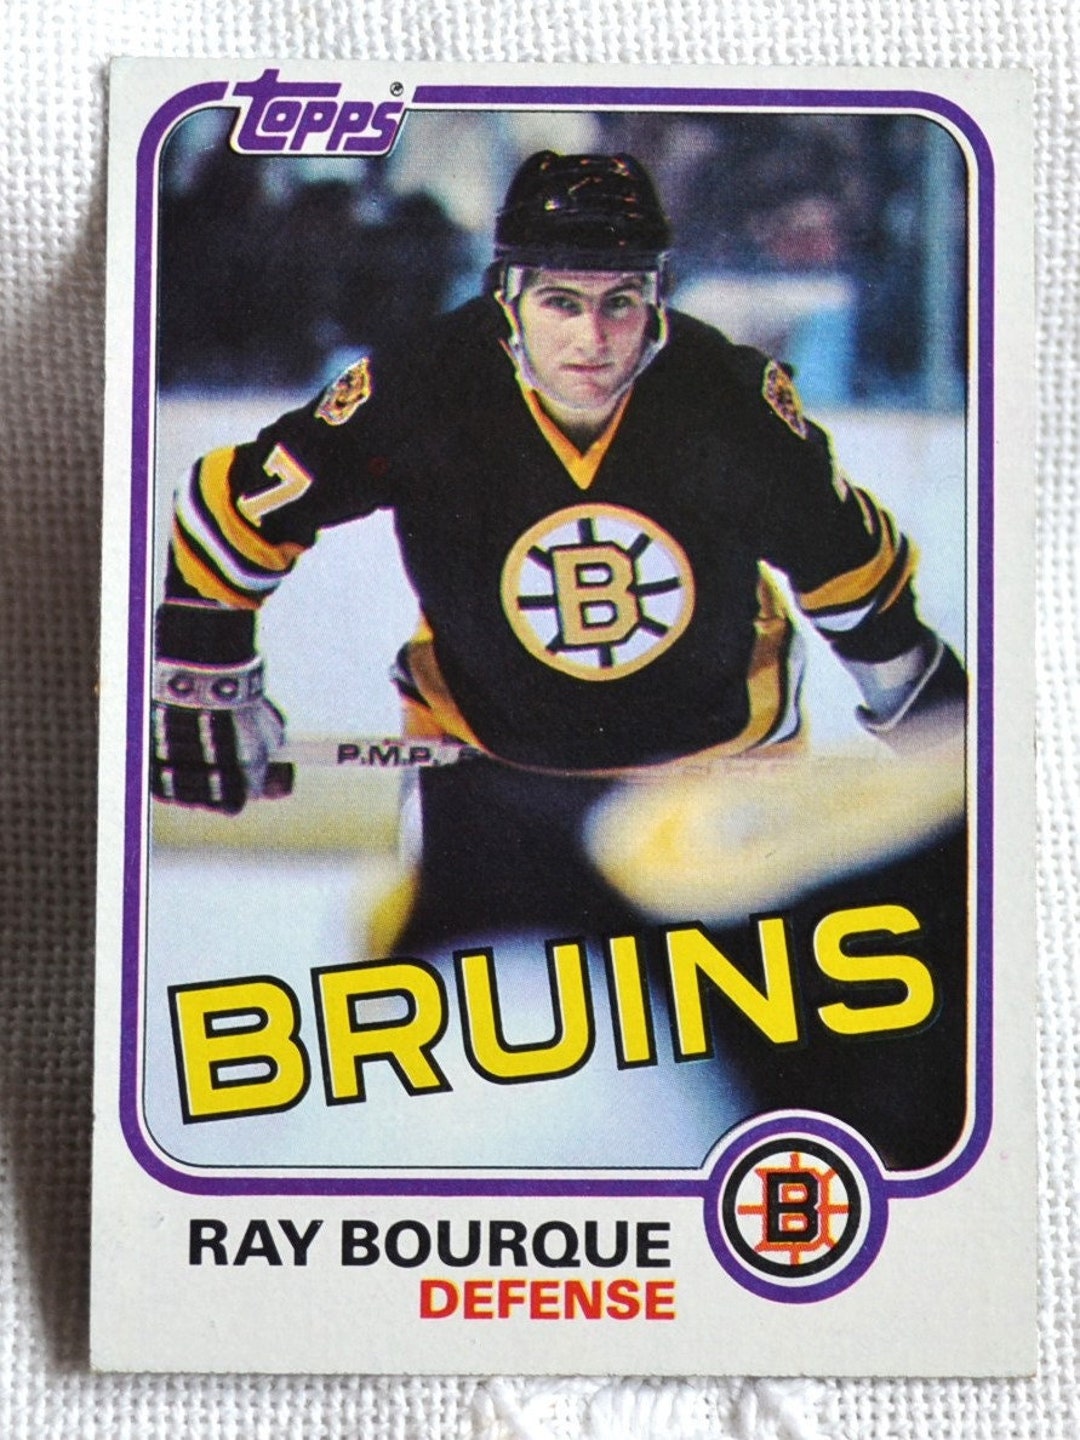 Ray Bourque NHL Memorabilia, Ray Bourque Collectibles, Verified